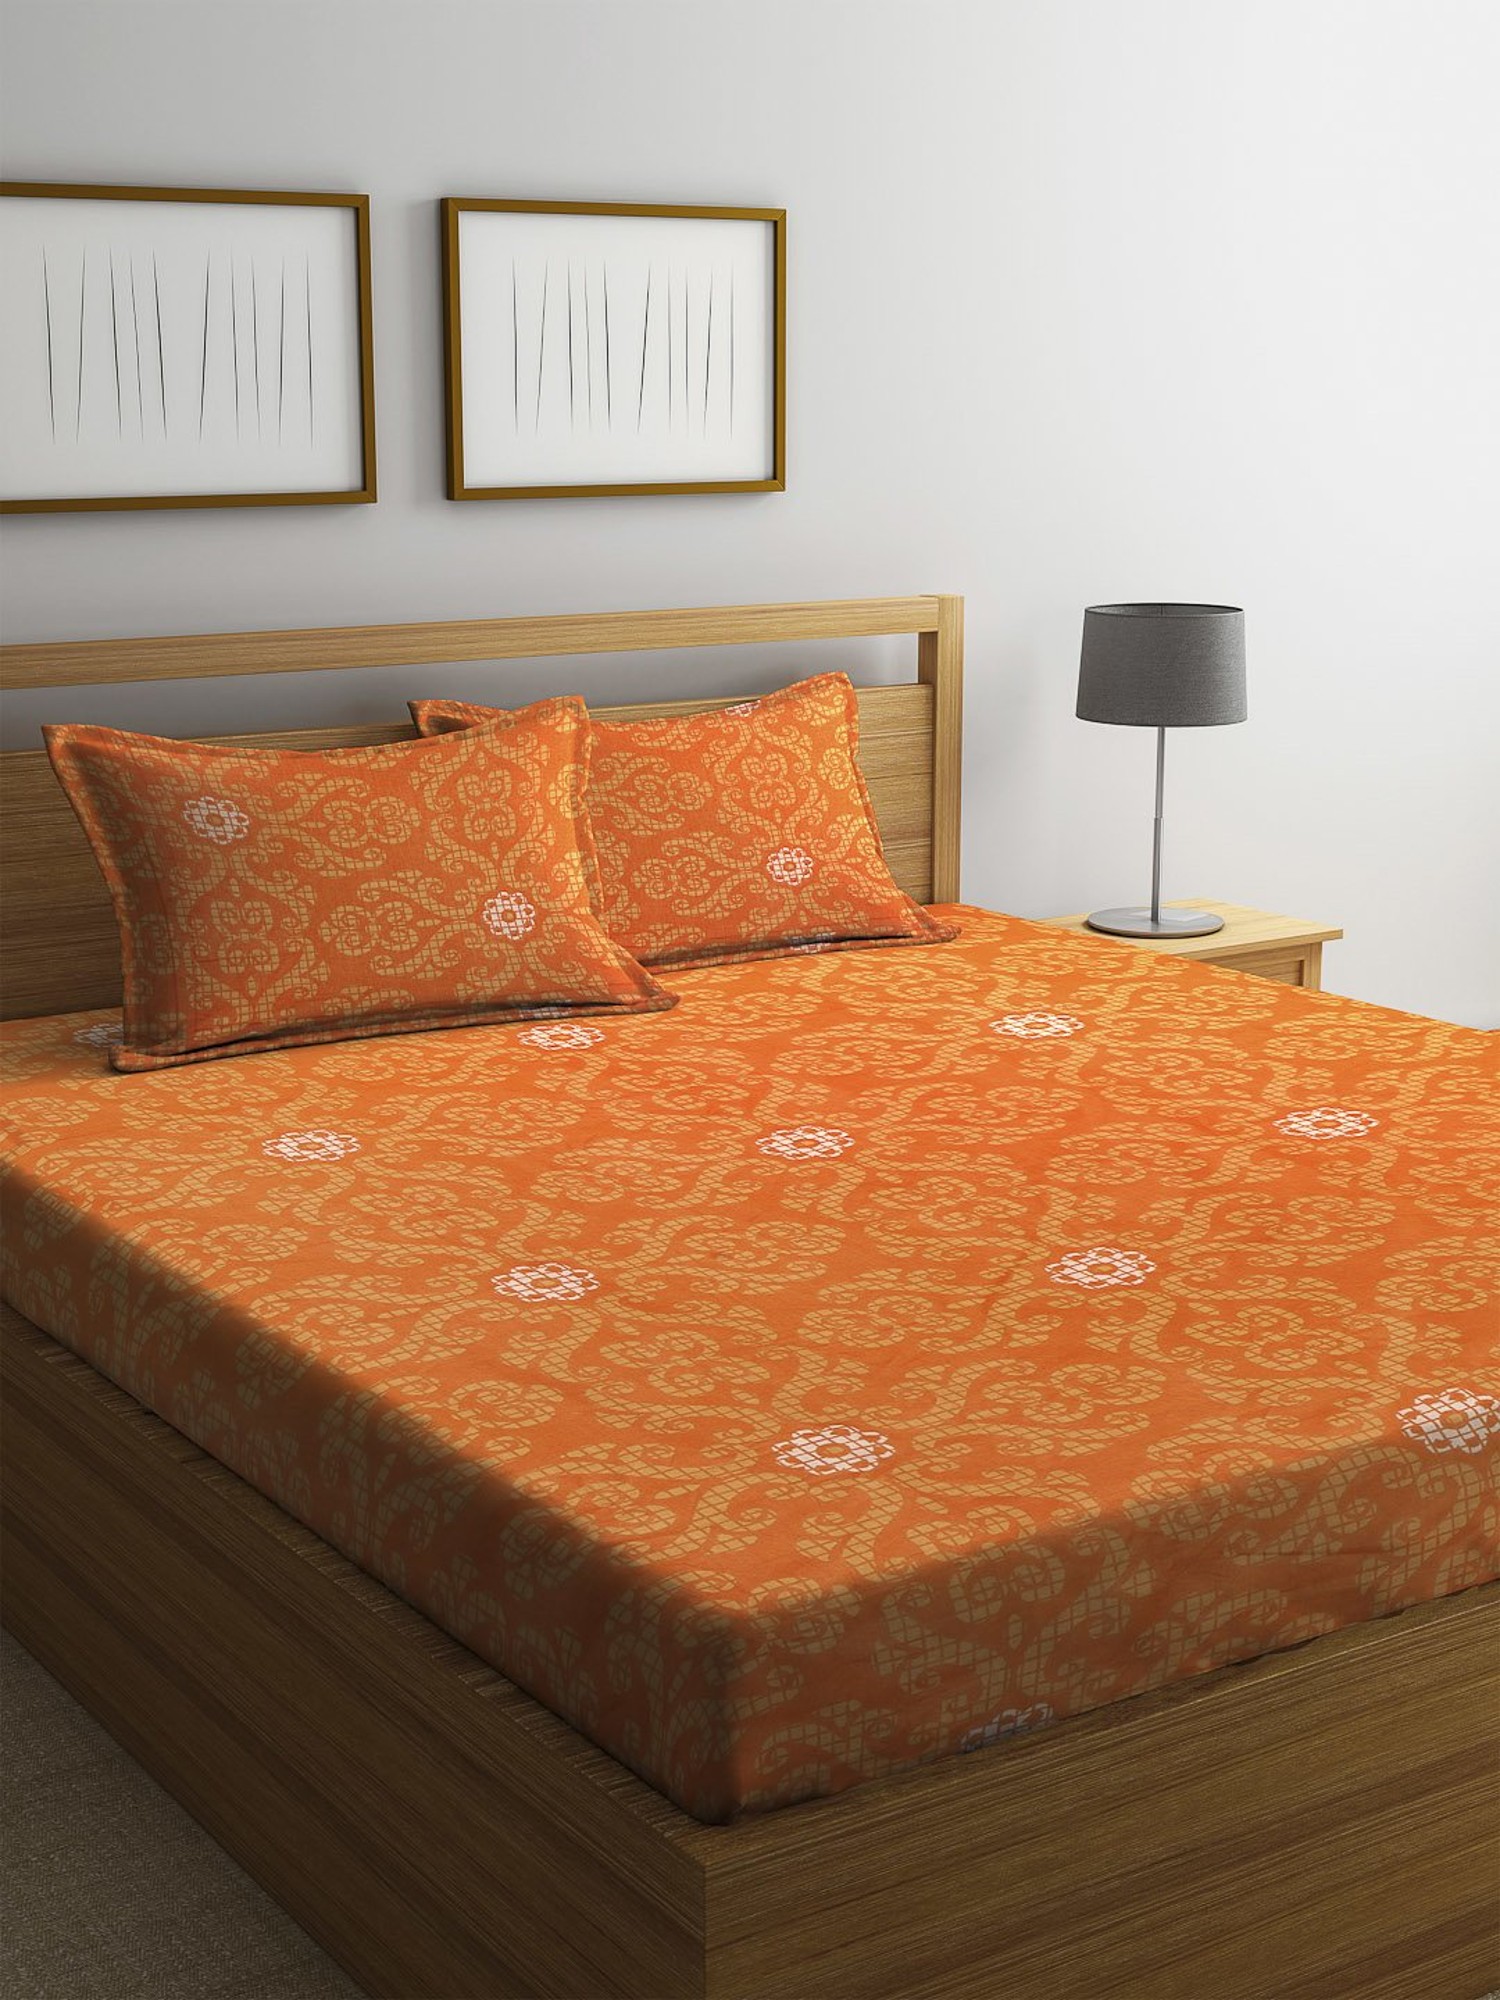 Buy Swhf Orange Motif Cotton Double Bed Sheet Set Online At